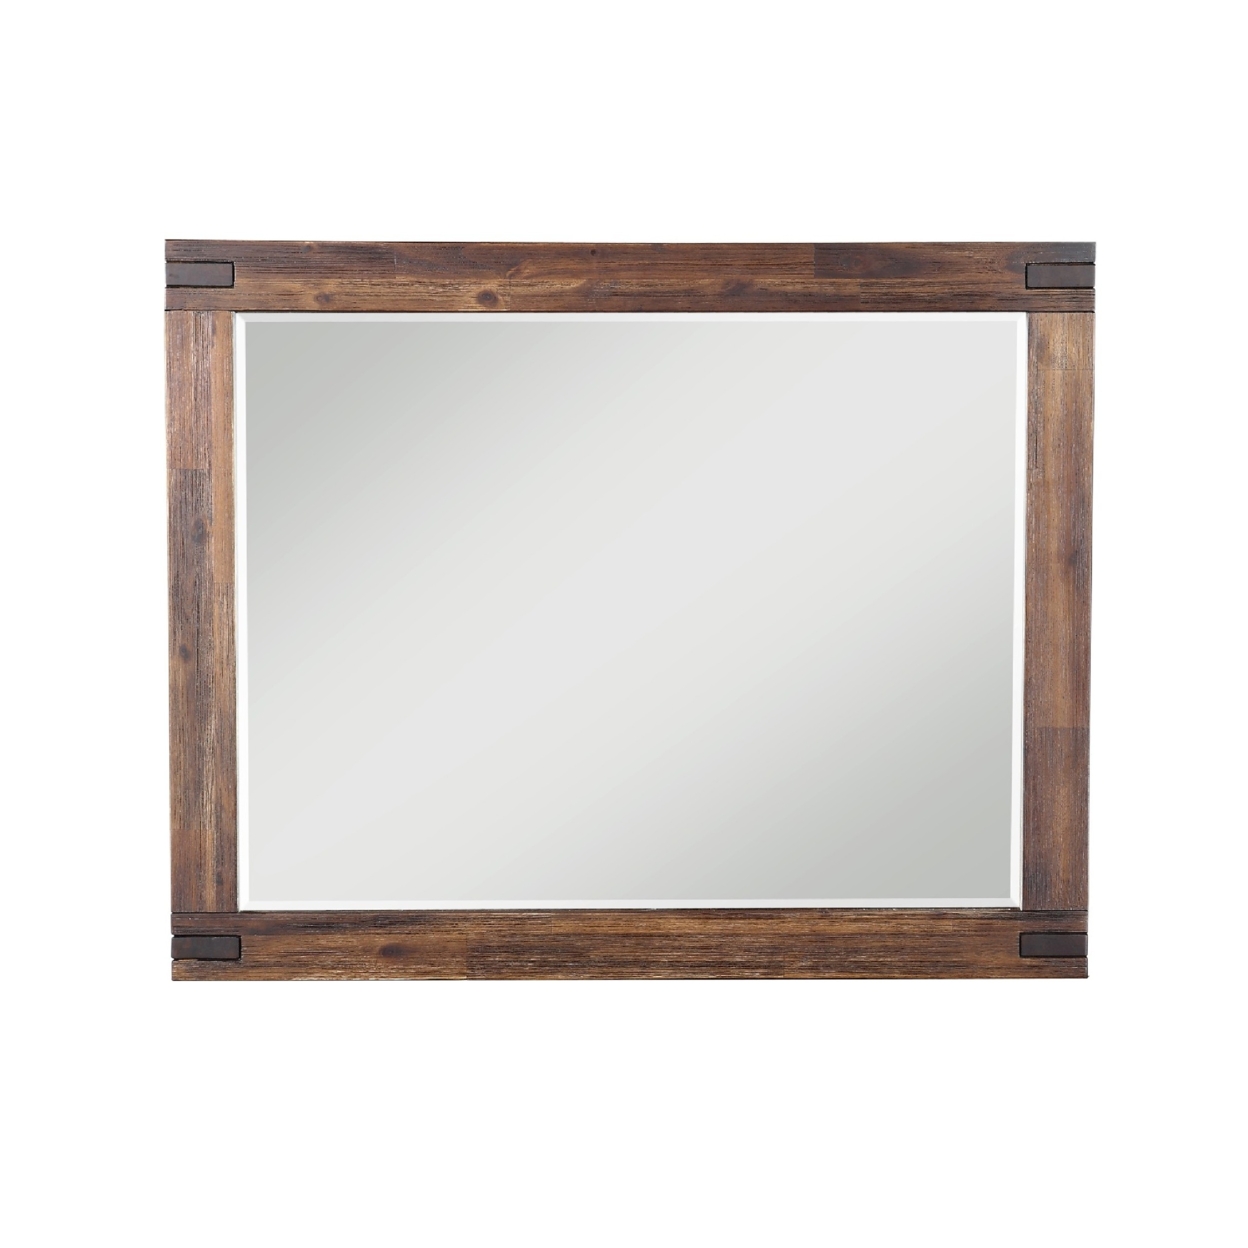 Pim 48 Inch Solid Wood Dresser Mirror With Metal Brackets, Rustic Brown- Saltoro Sherpi